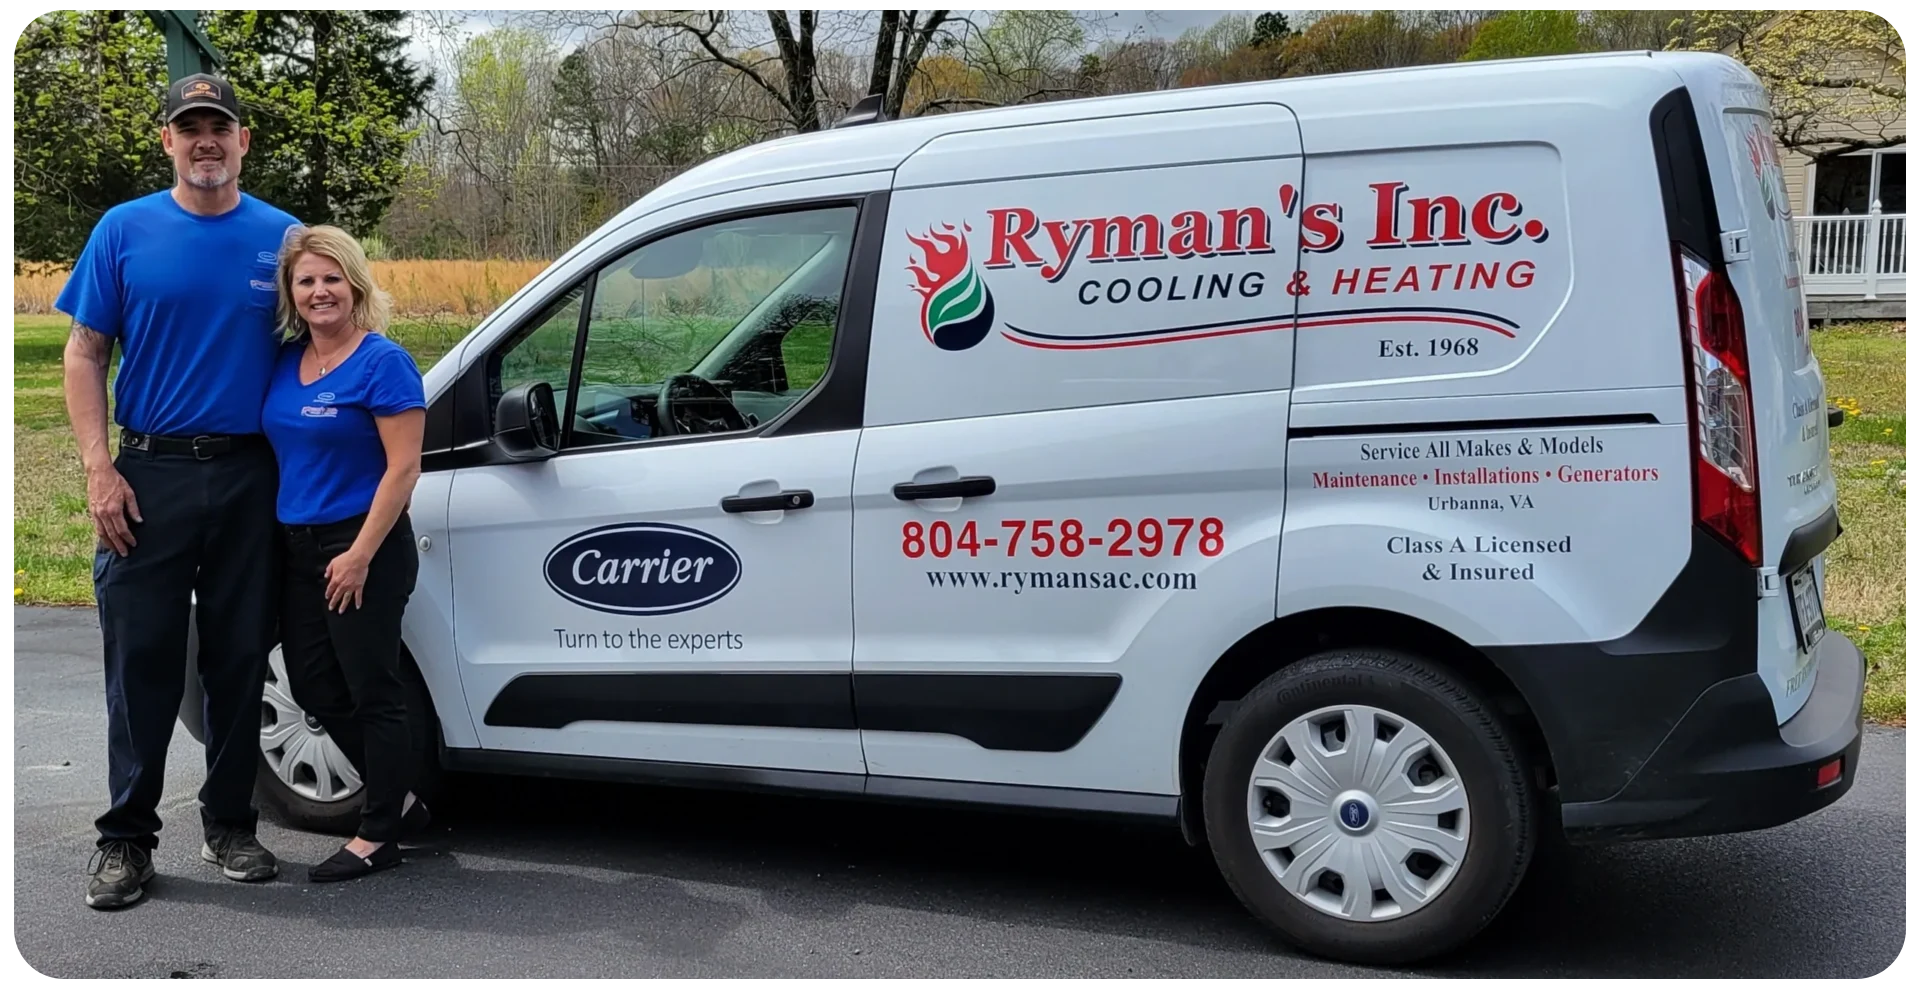 A white van with the company name ryman 's inn.